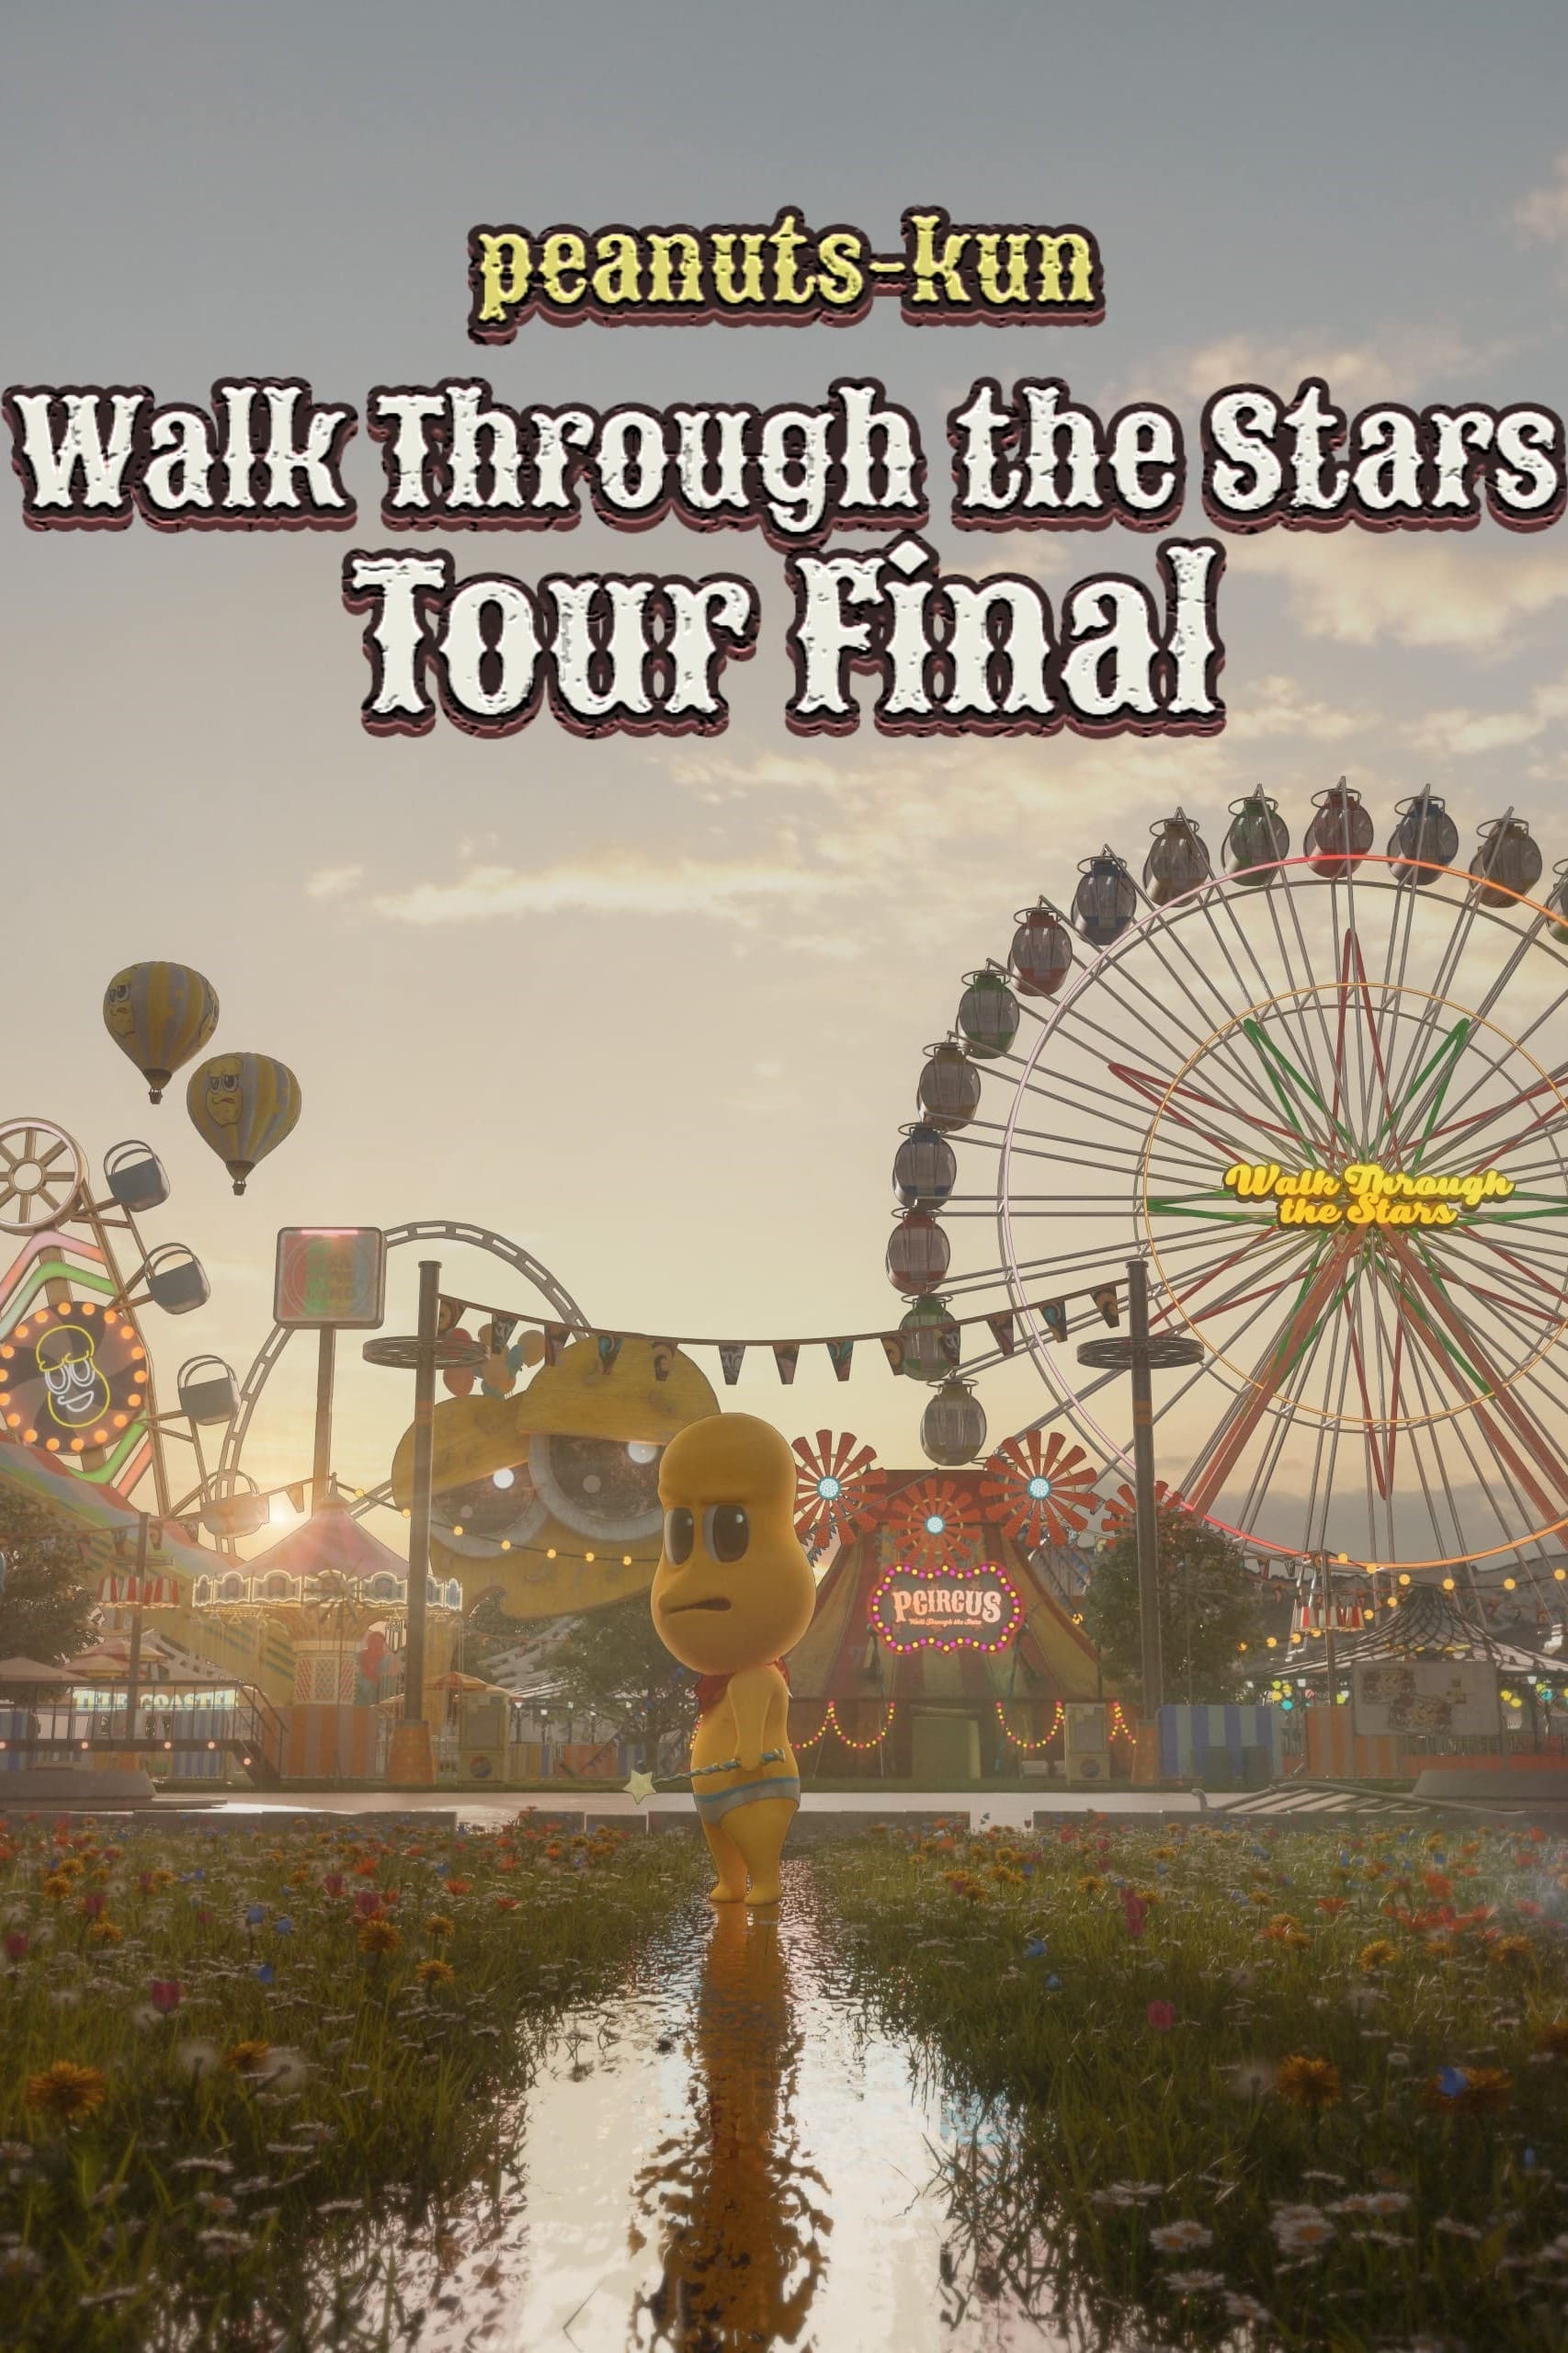 Peanuts-kun Walk Through the Stars Tour Final